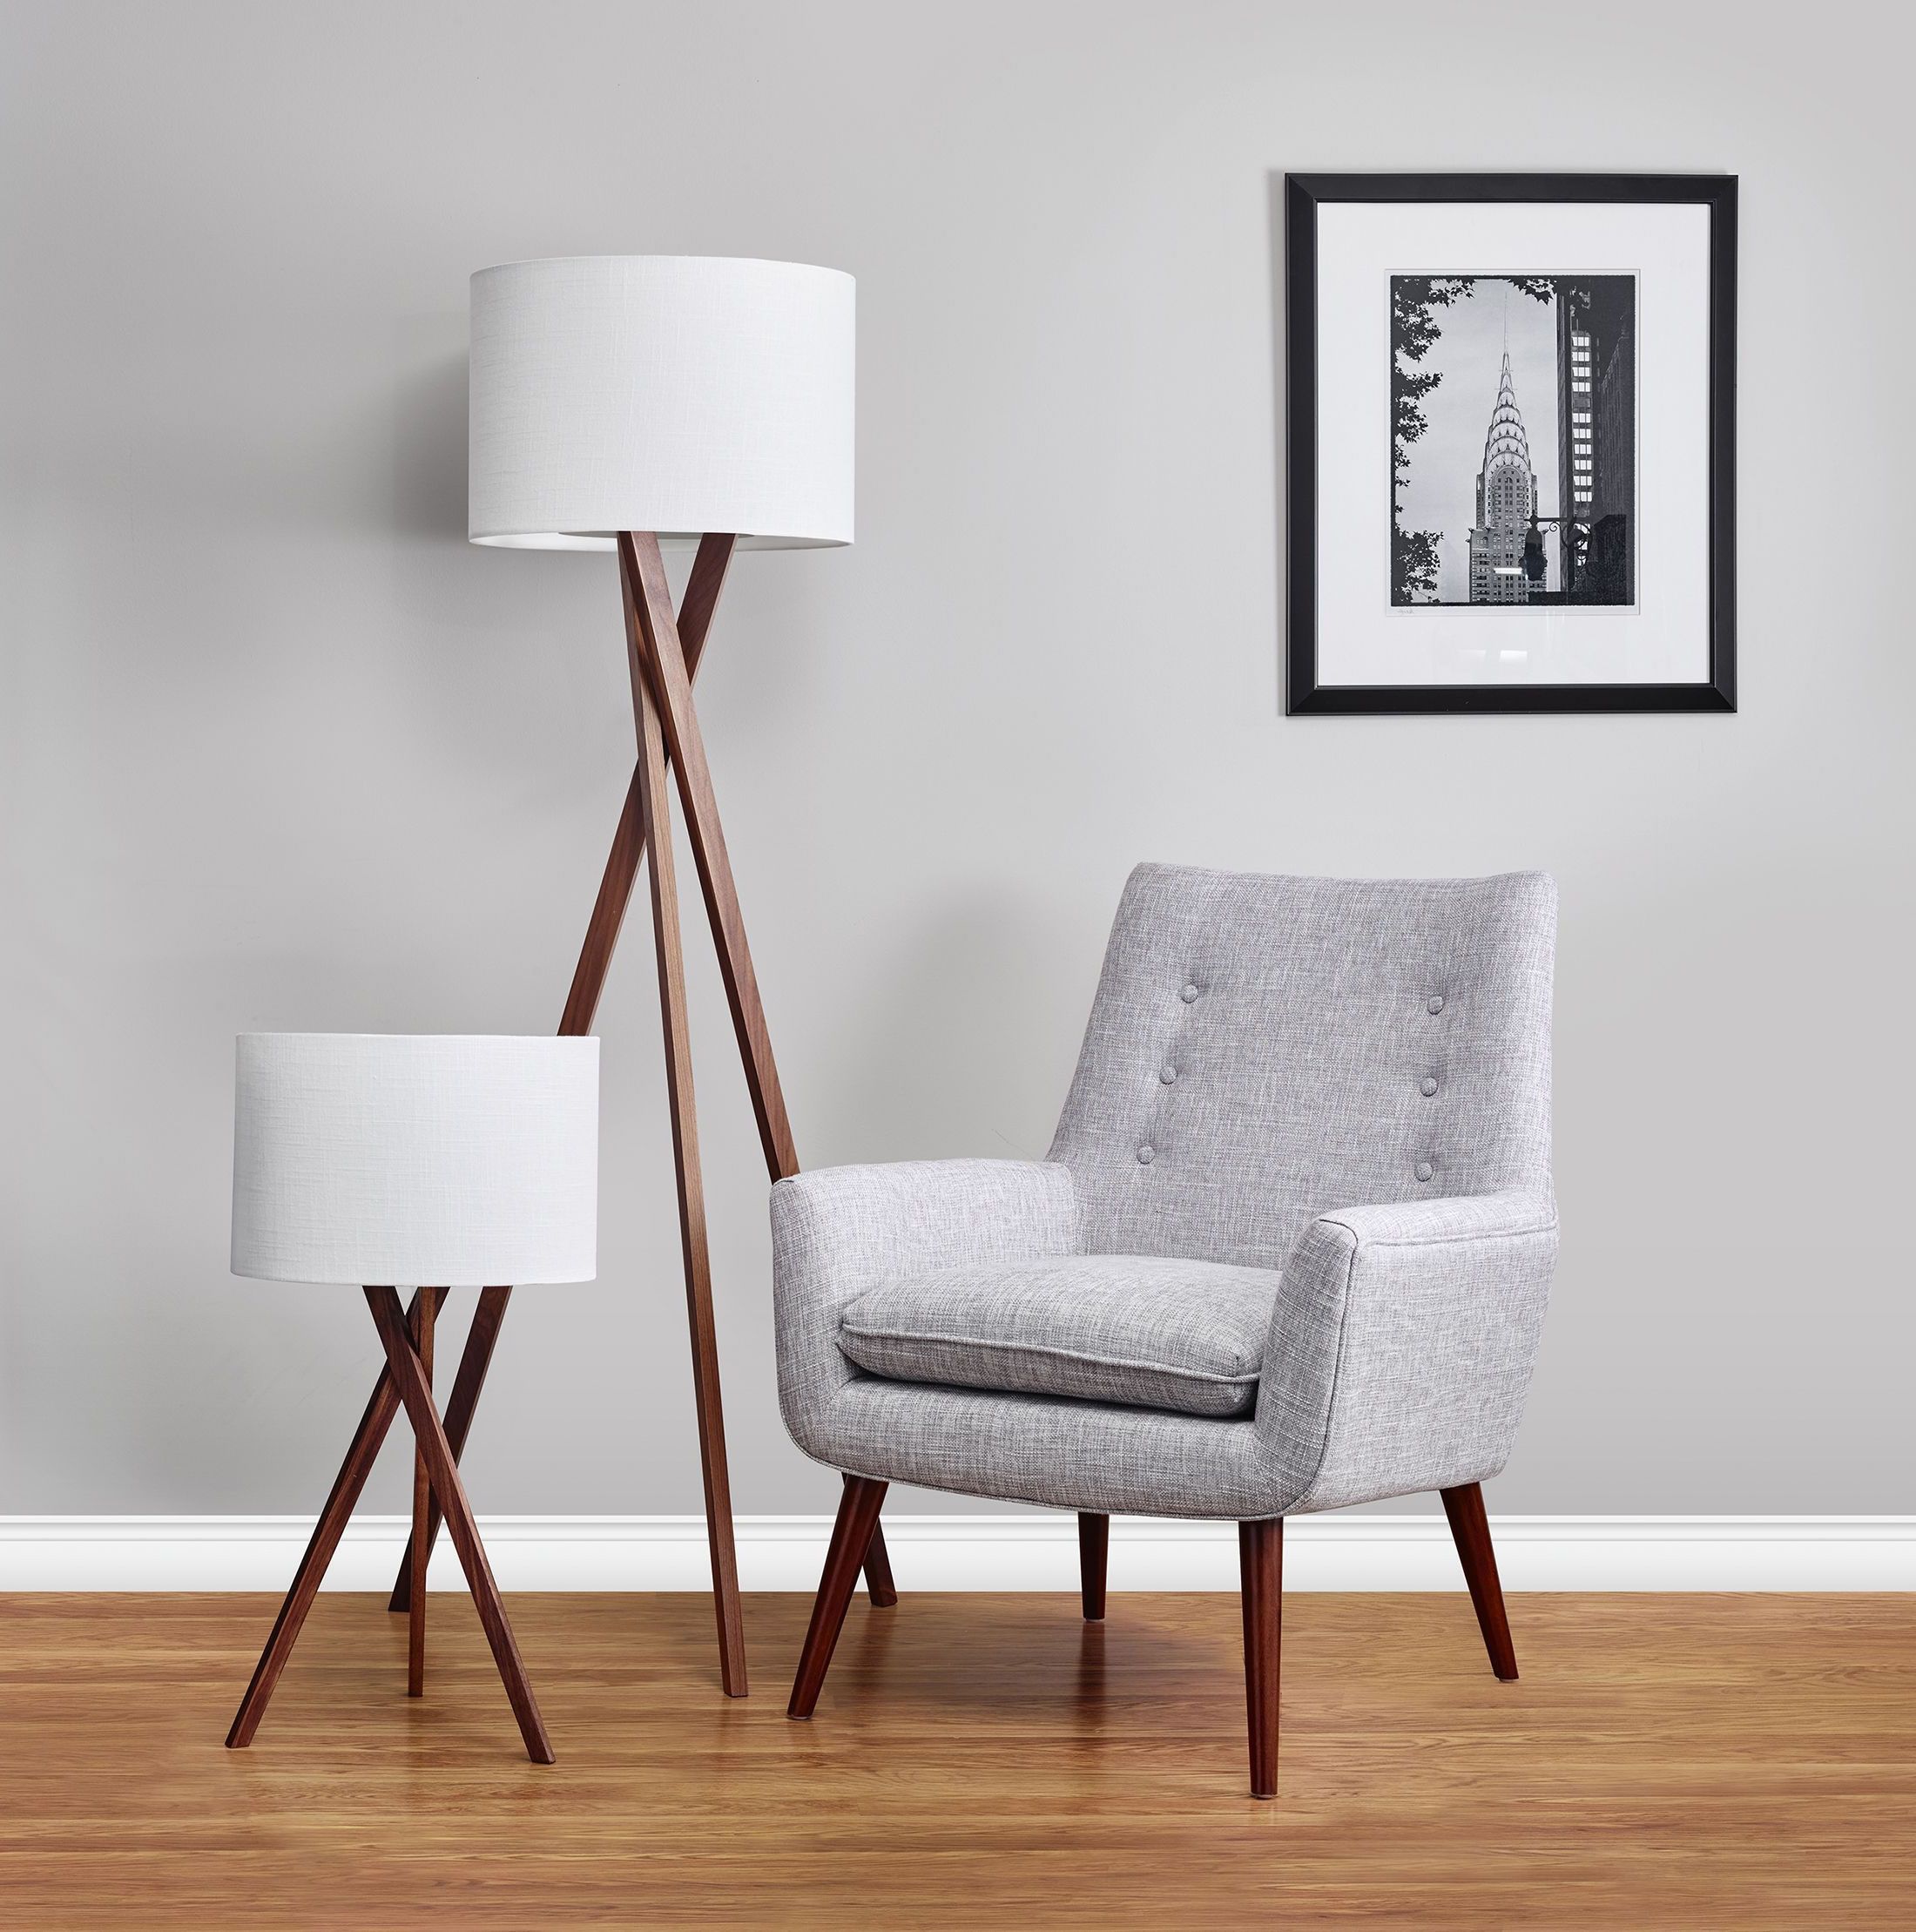 Adesso Brooklyn Floor Lamp (walnut) – Ad 3227 15 | Modern Furniture Canada Within Walnut Floor Lamps (View 12 of 20)